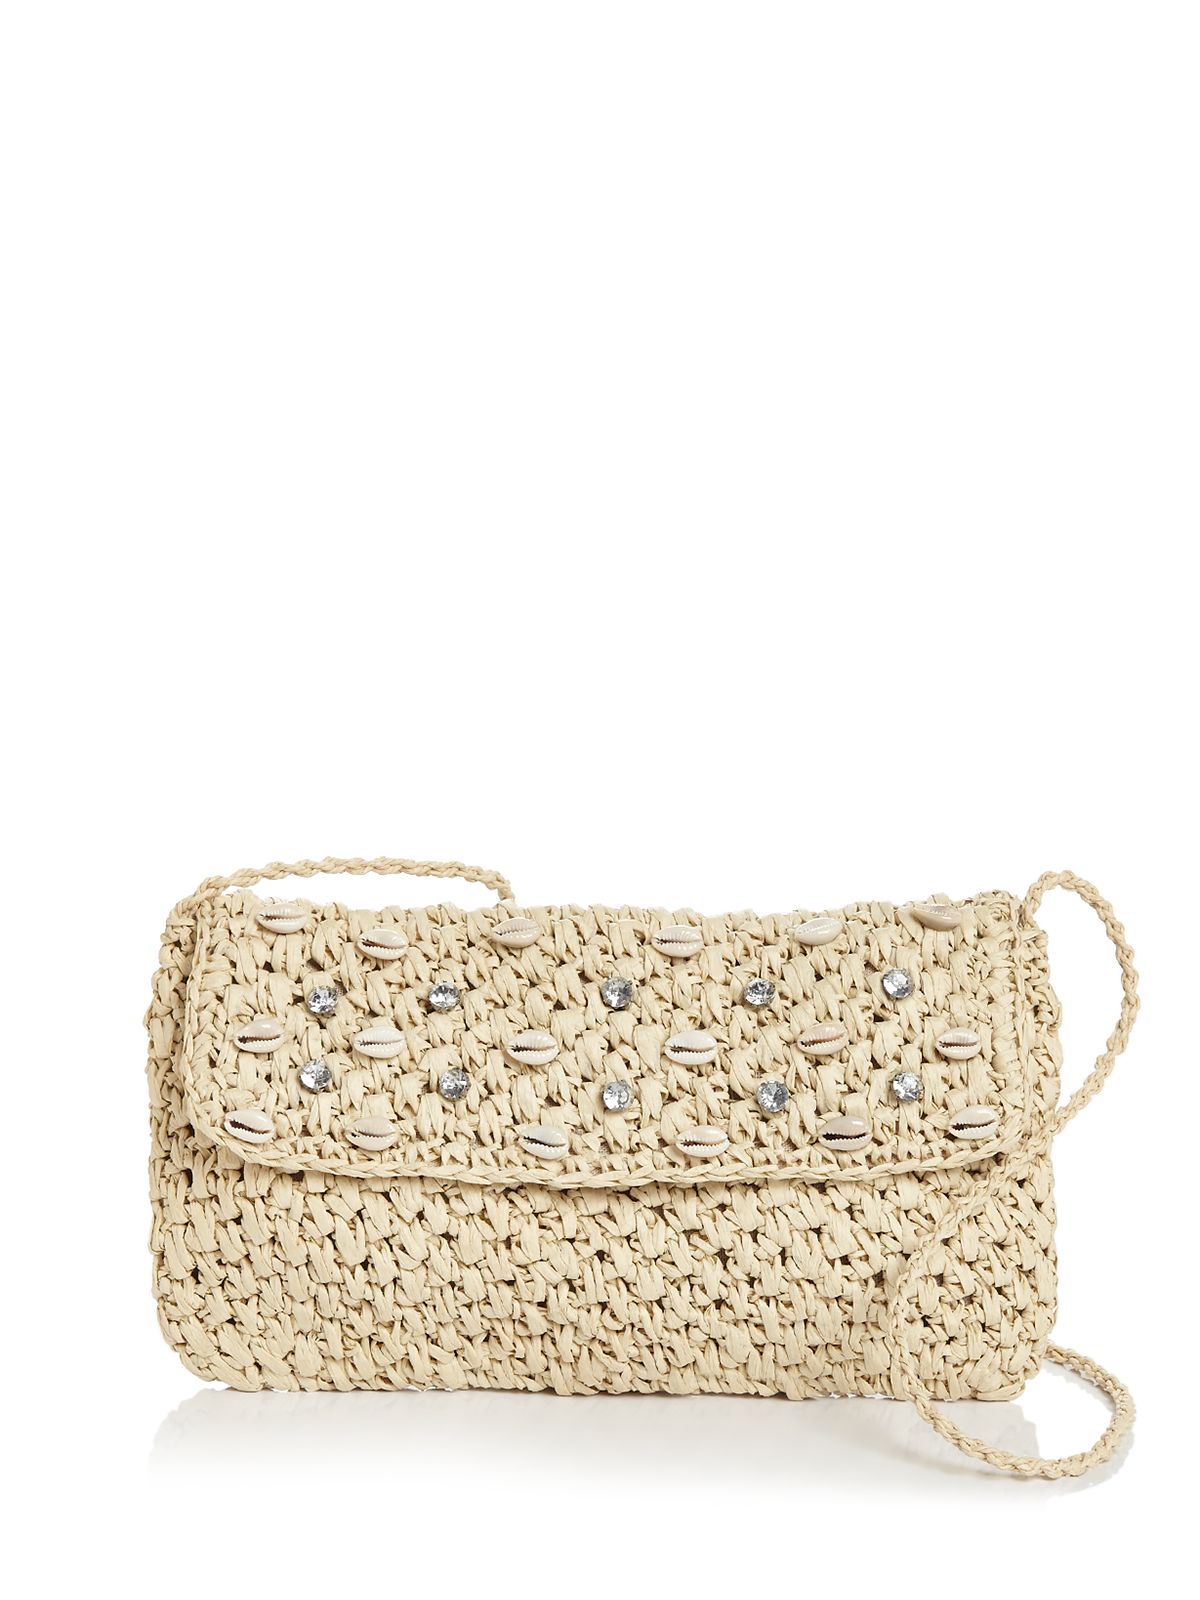 AQUA Women's Beige Rhinestone Solid Woven Seashell Single Strap Clutch Handbag Purse